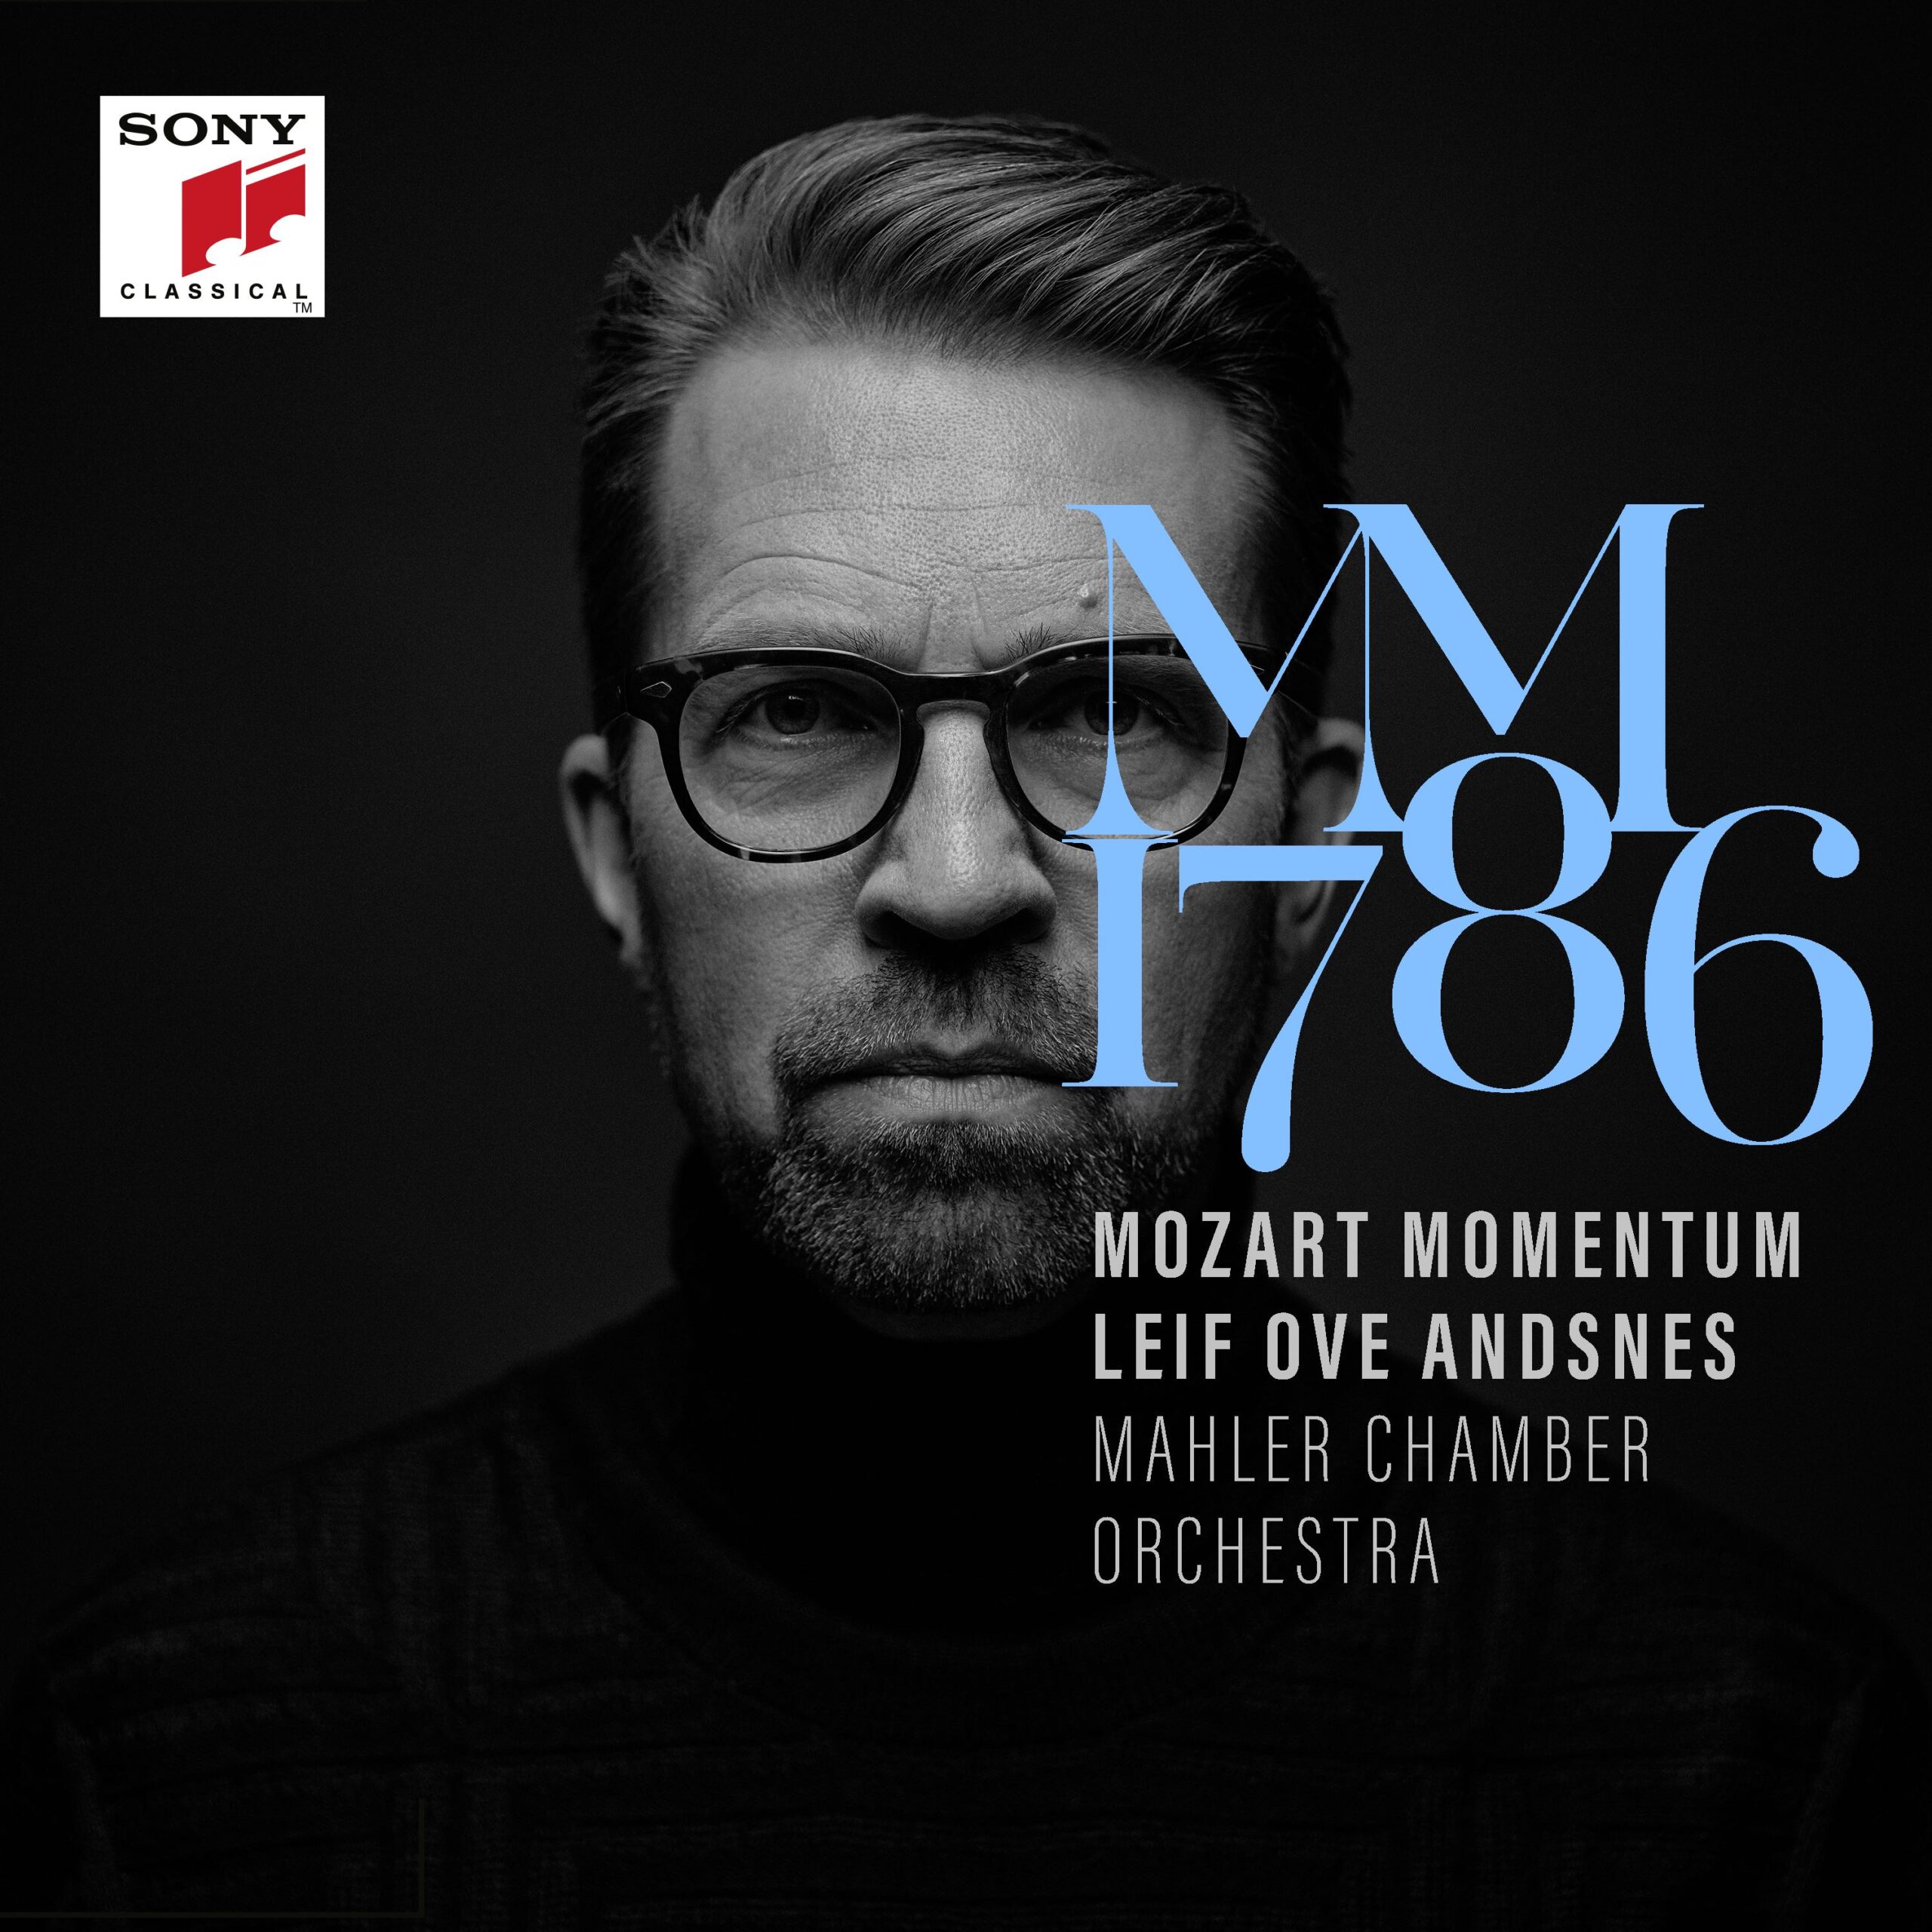 Mozart Momentum 1786